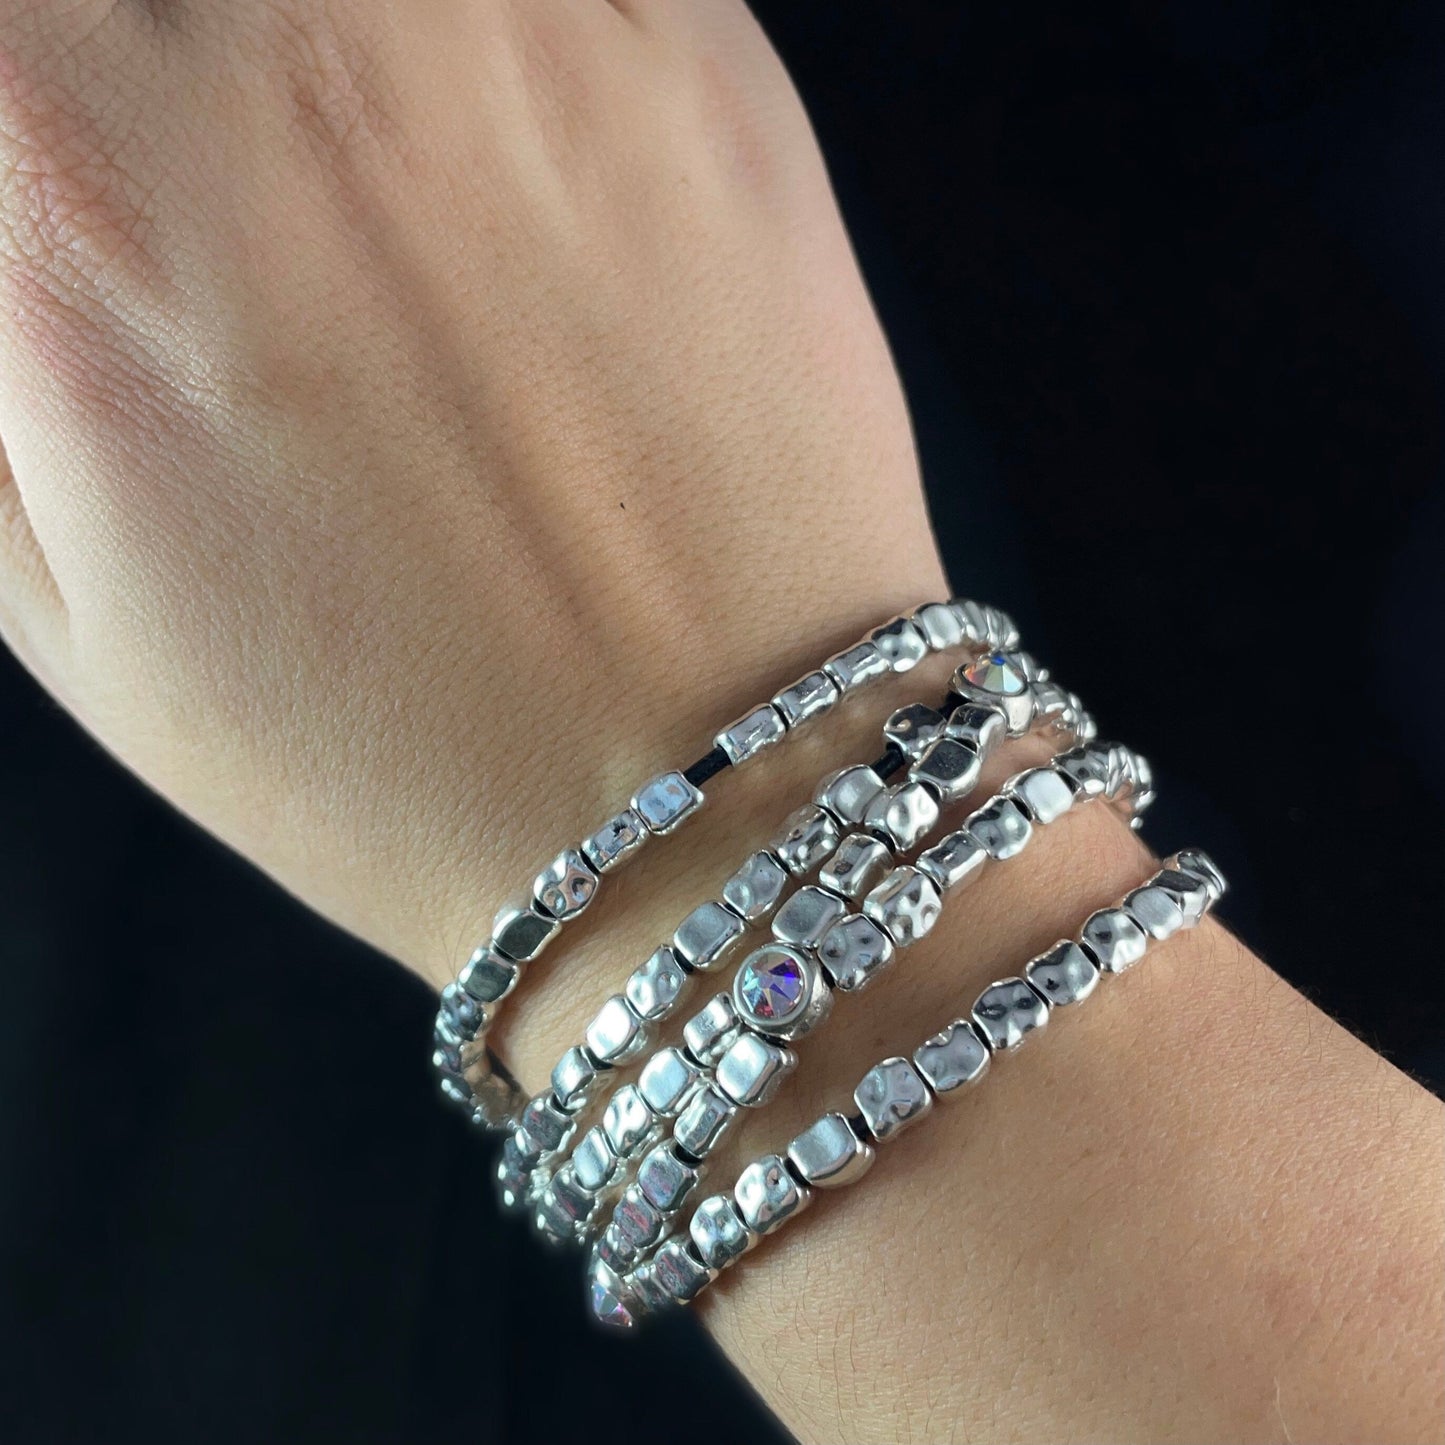 Silver Layered Crystal Bracelet - Handmade in Spainl